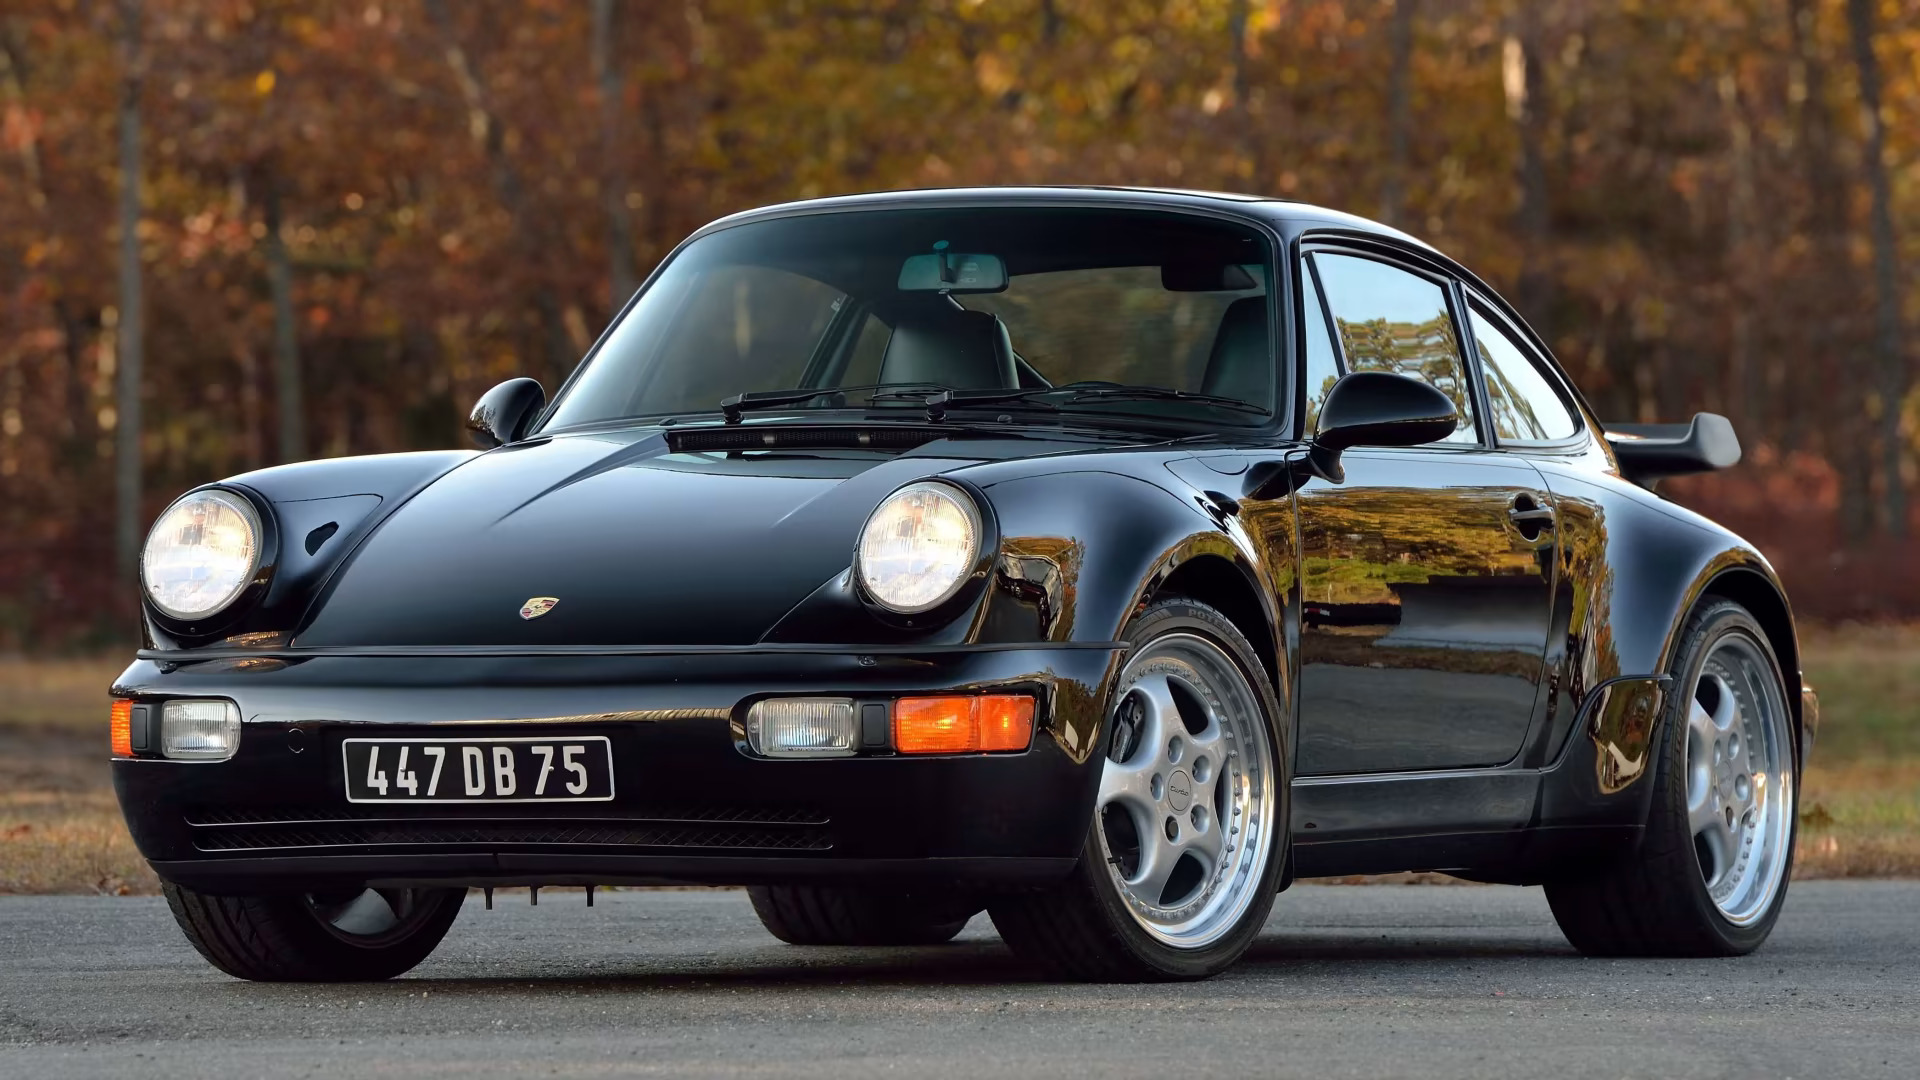 Porsche 911 Turbo (type 964) from the movie Bad Boys